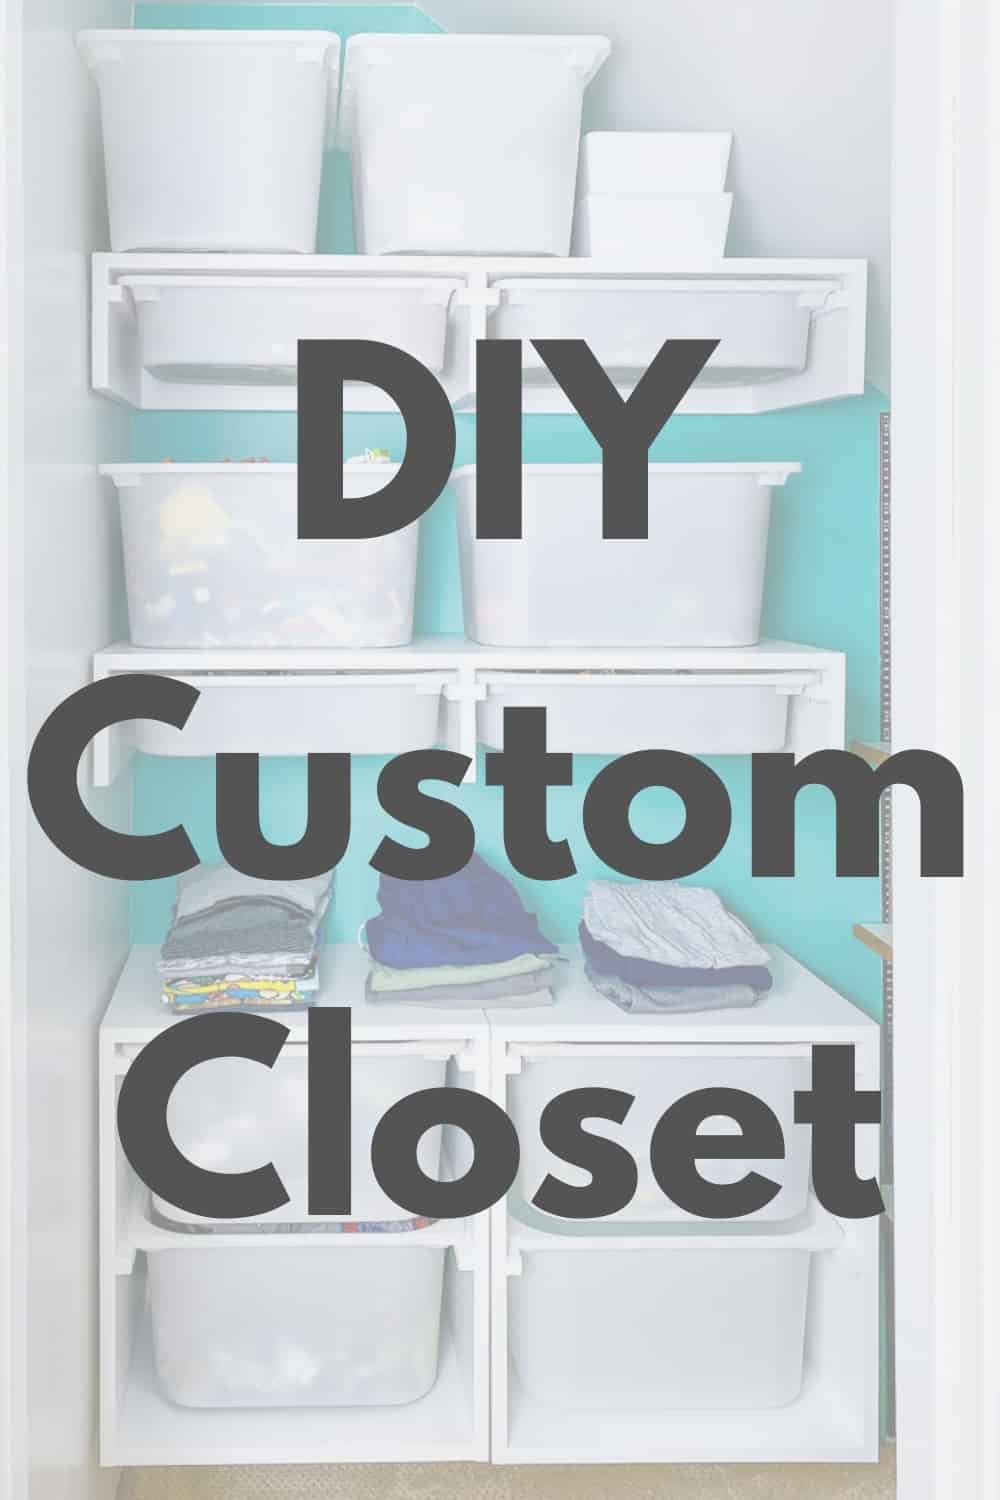 DIY custom closet with text overlay